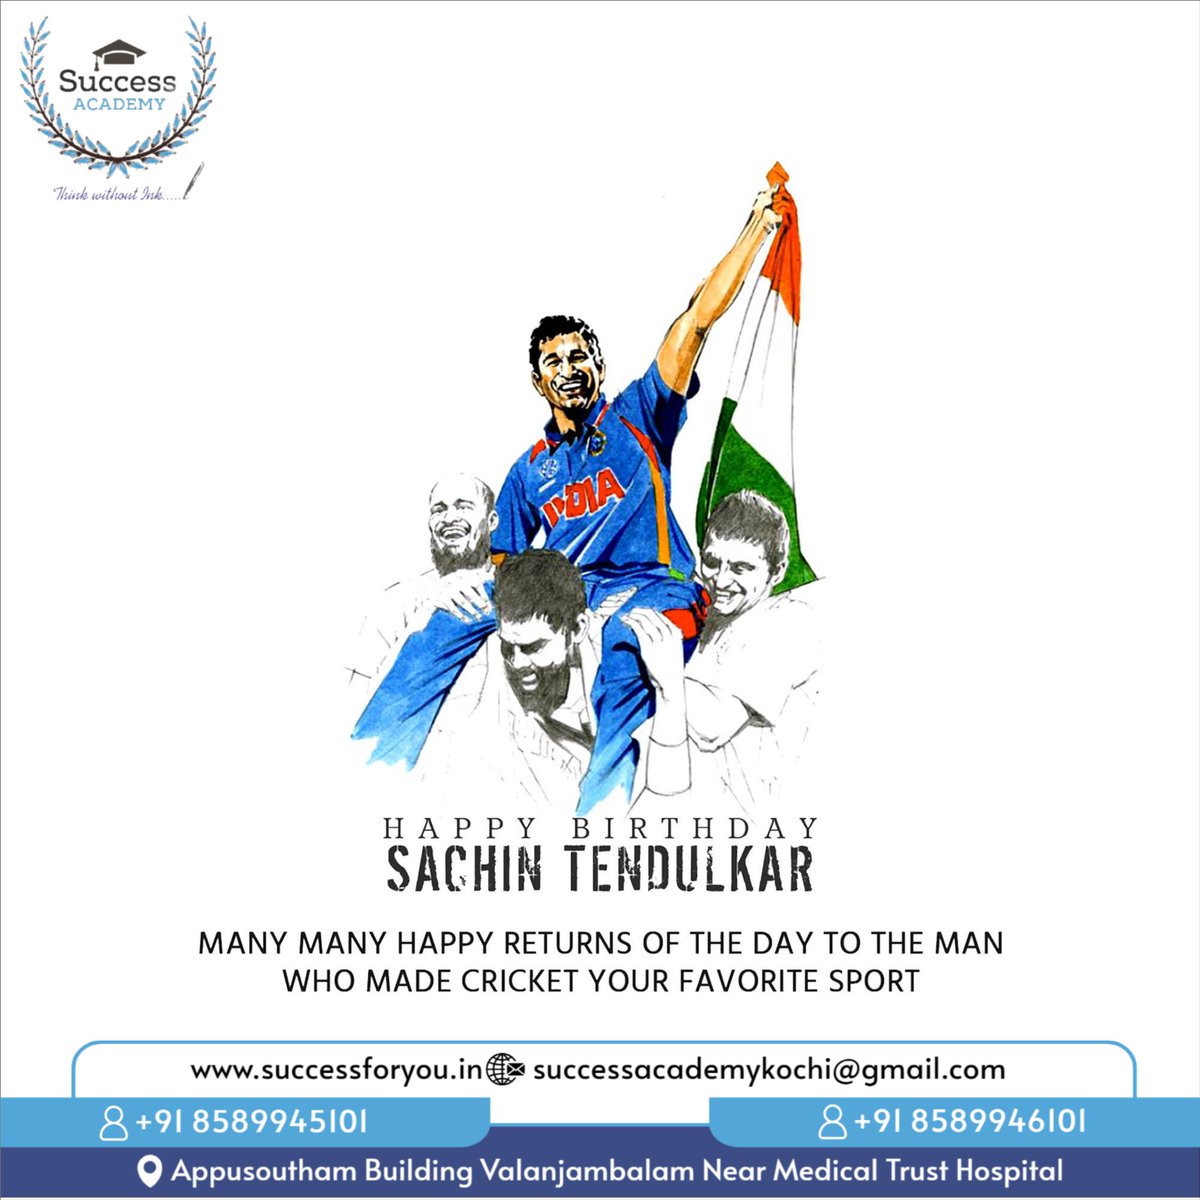 #HappyBirthdaySachin #GodOfCricket #SachinTendulkar #MasterBlaster #Legend
#CricketIcon #SachinBirthdayCelebration #BharatRatna #CricketLegend #Sachin46
#HappyBirthdayMaster #SachinSachin #CricketGreat #TeamIndia #IndianCricket #SSCCoaching #BankCoaching #SuccessAcademyKochi